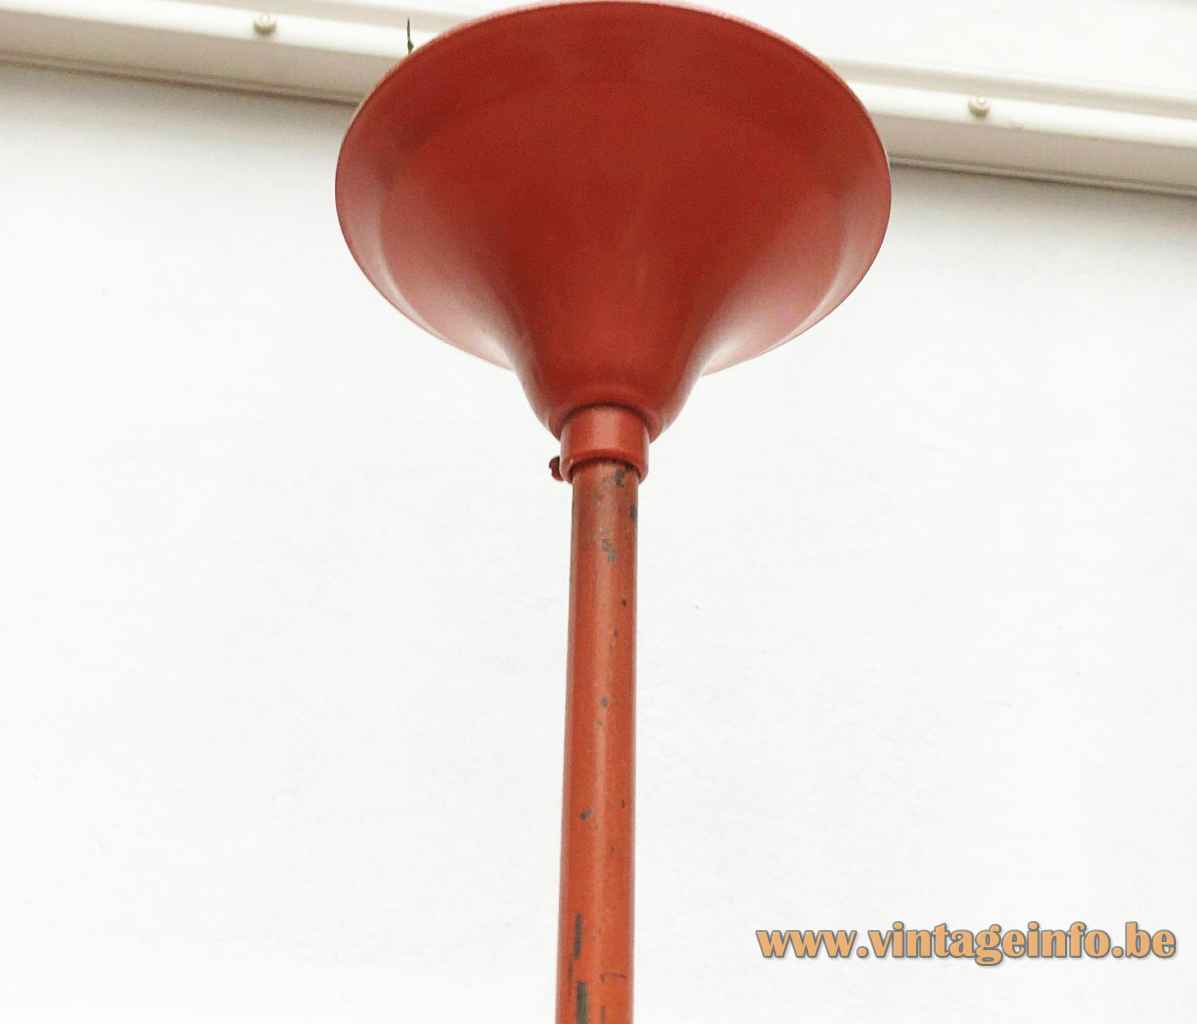 Van Haute orange pendant lamp round metal canopy & rod no Louis Kalff design Philips 1960s Belgium